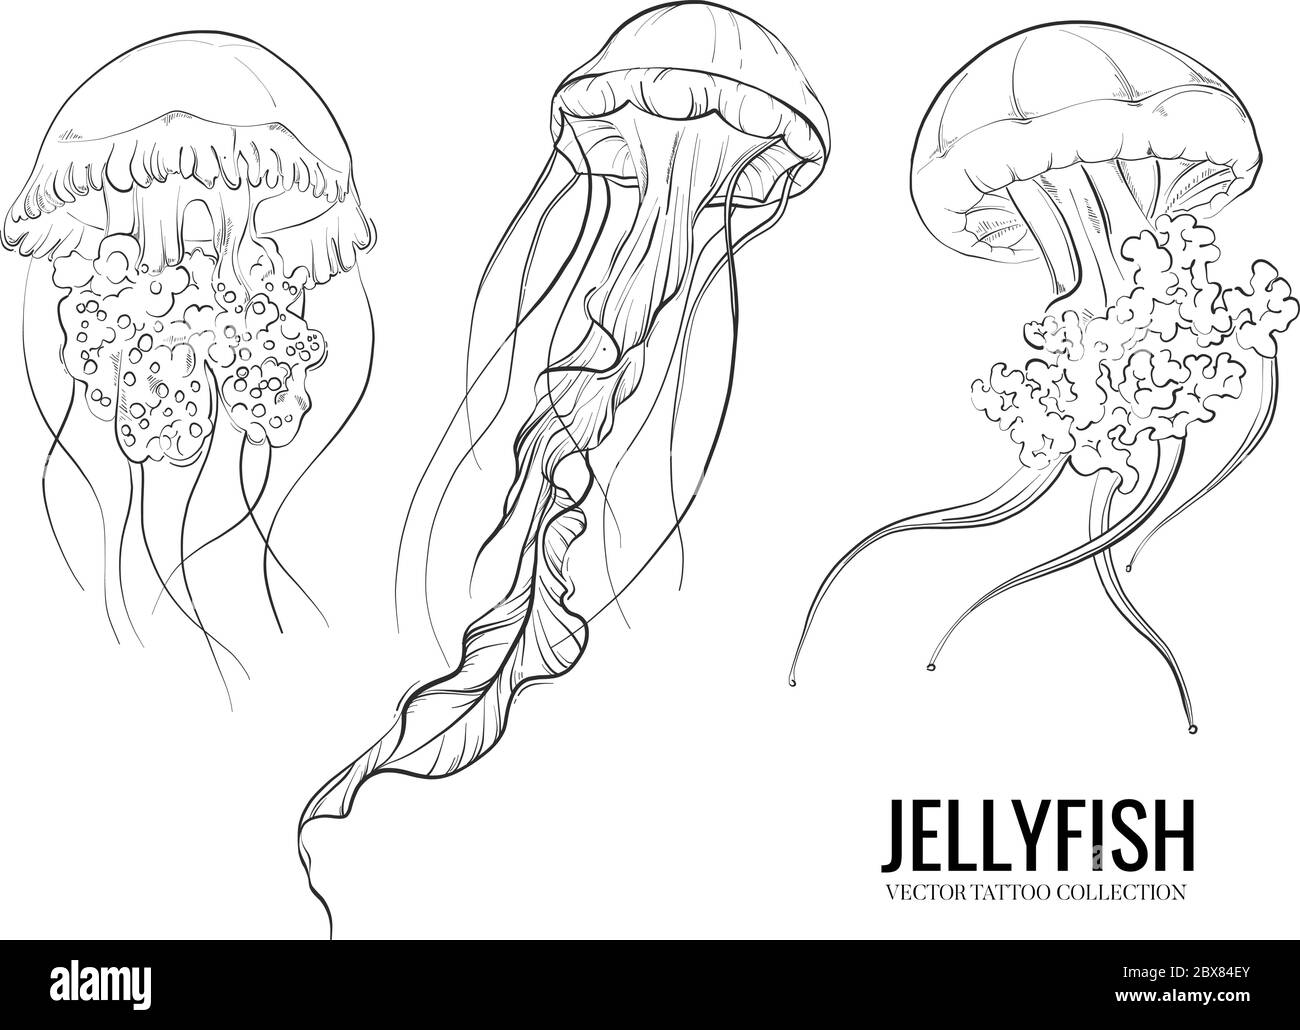 3566 Jellyfish Tattoo Images Stock Photos  Vectors  Shutterstock